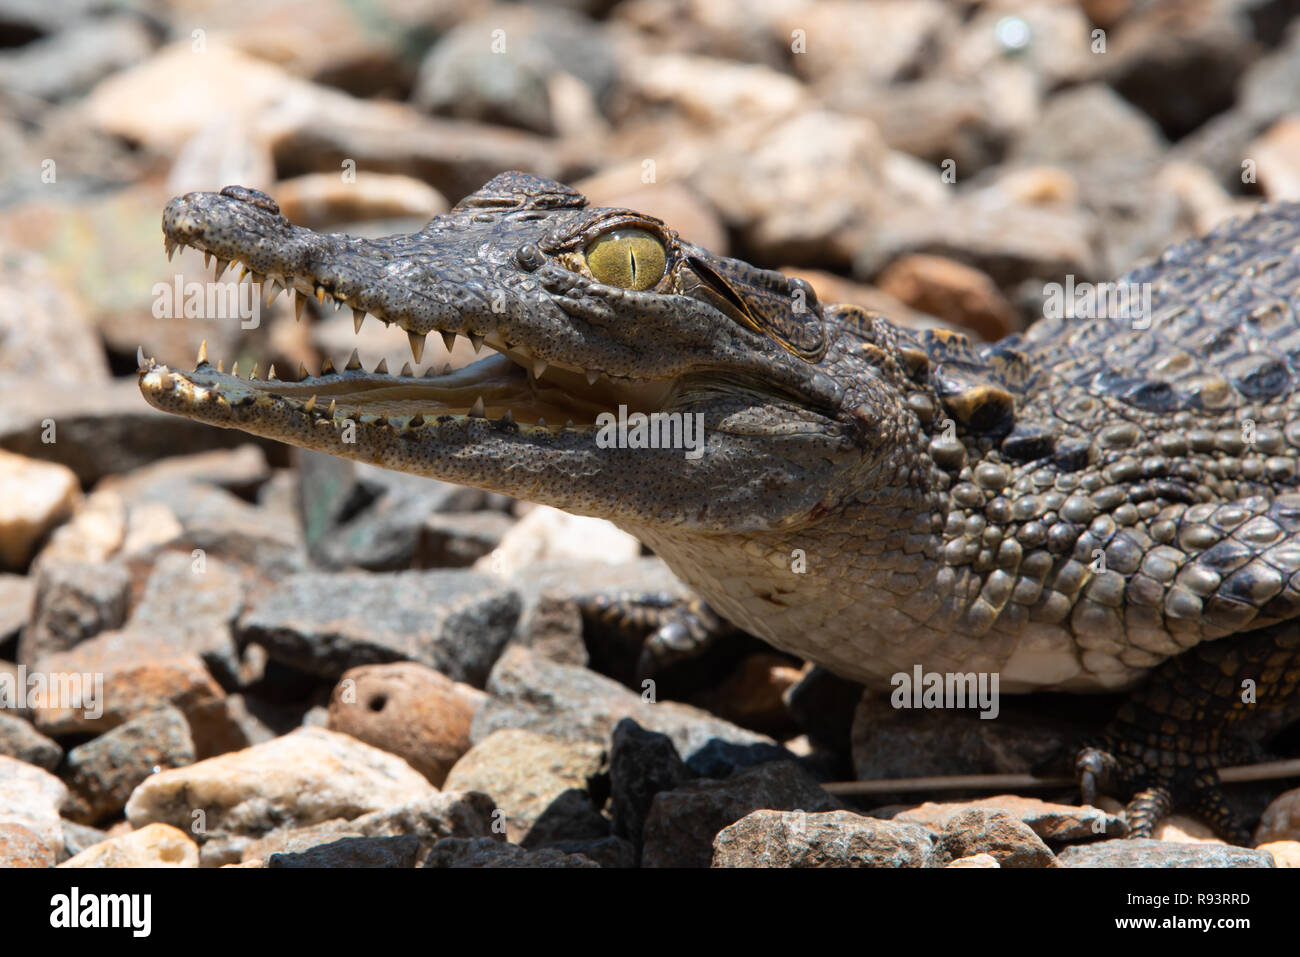 A young Nile Crocodile basks in the sun. Stock Photo